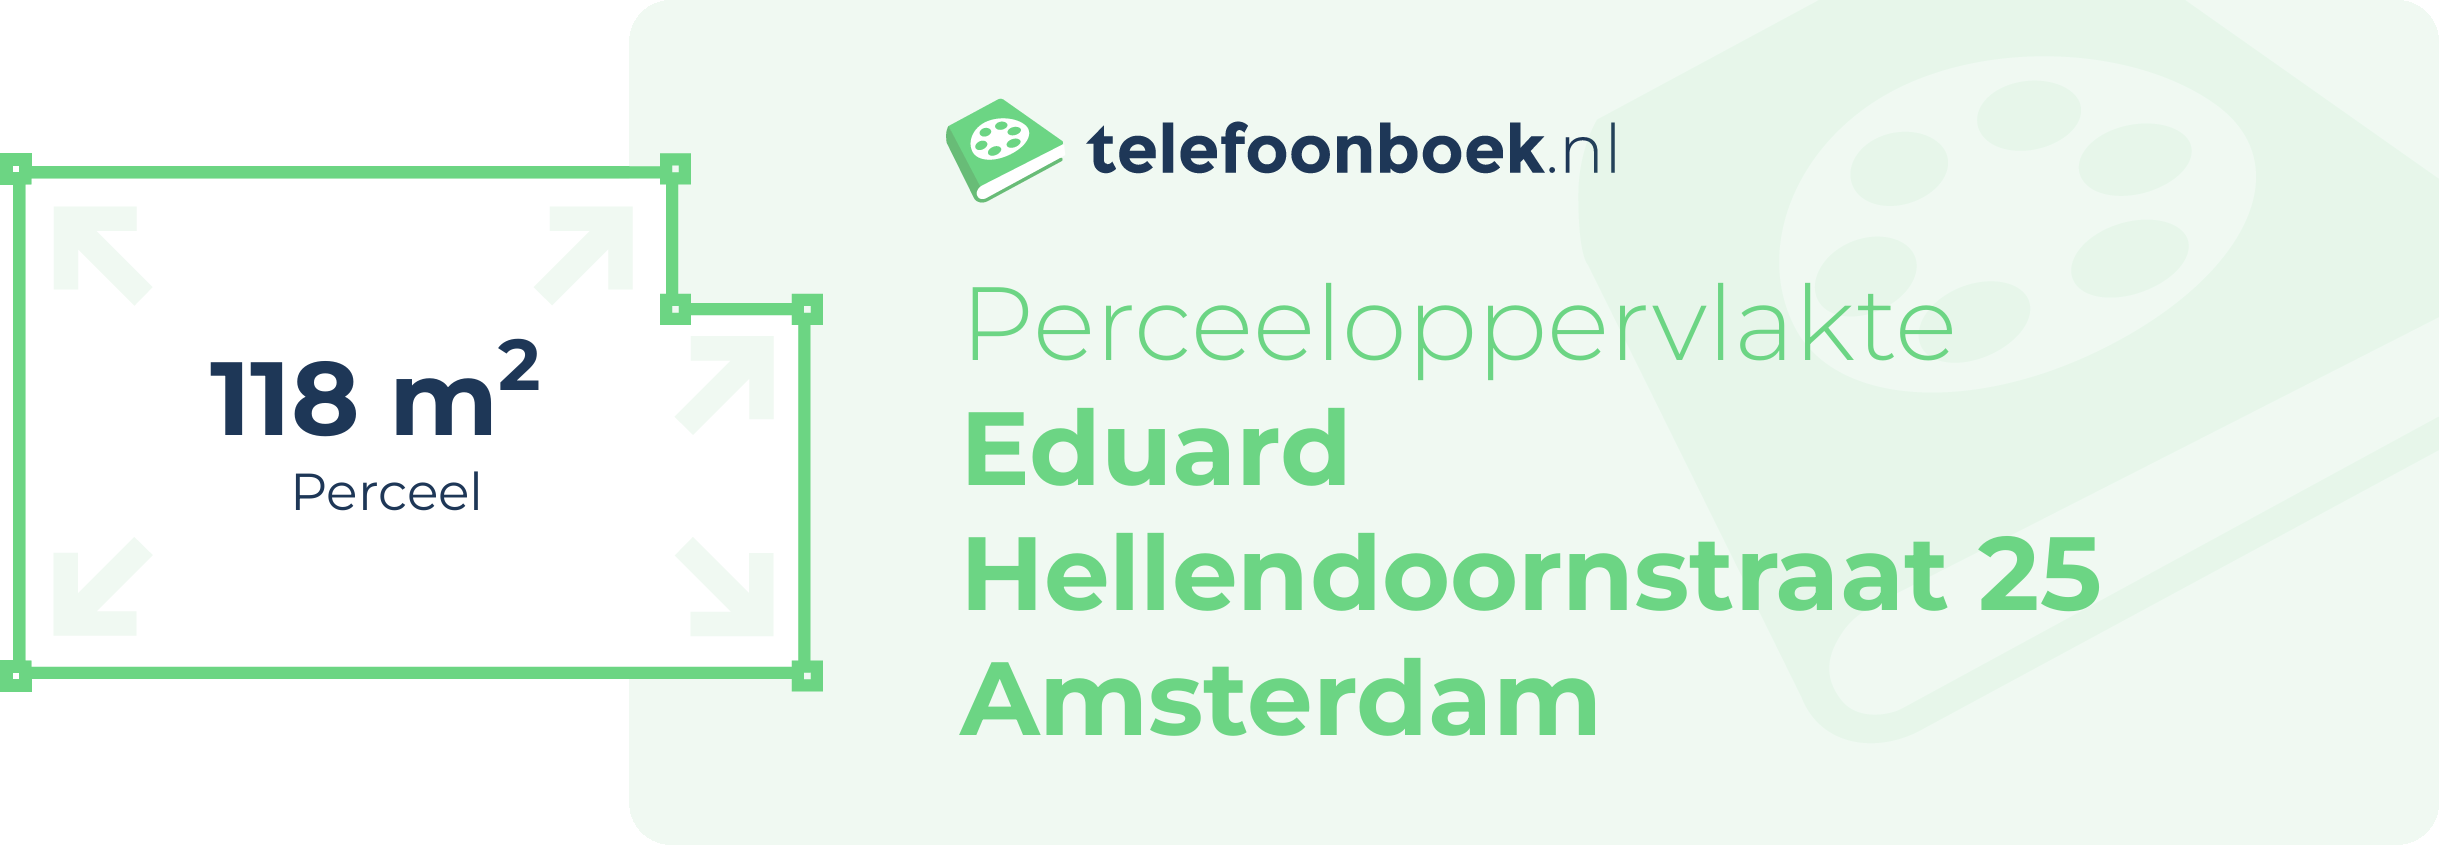 Perceeloppervlakte Eduard Hellendoornstraat 25 Amsterdam